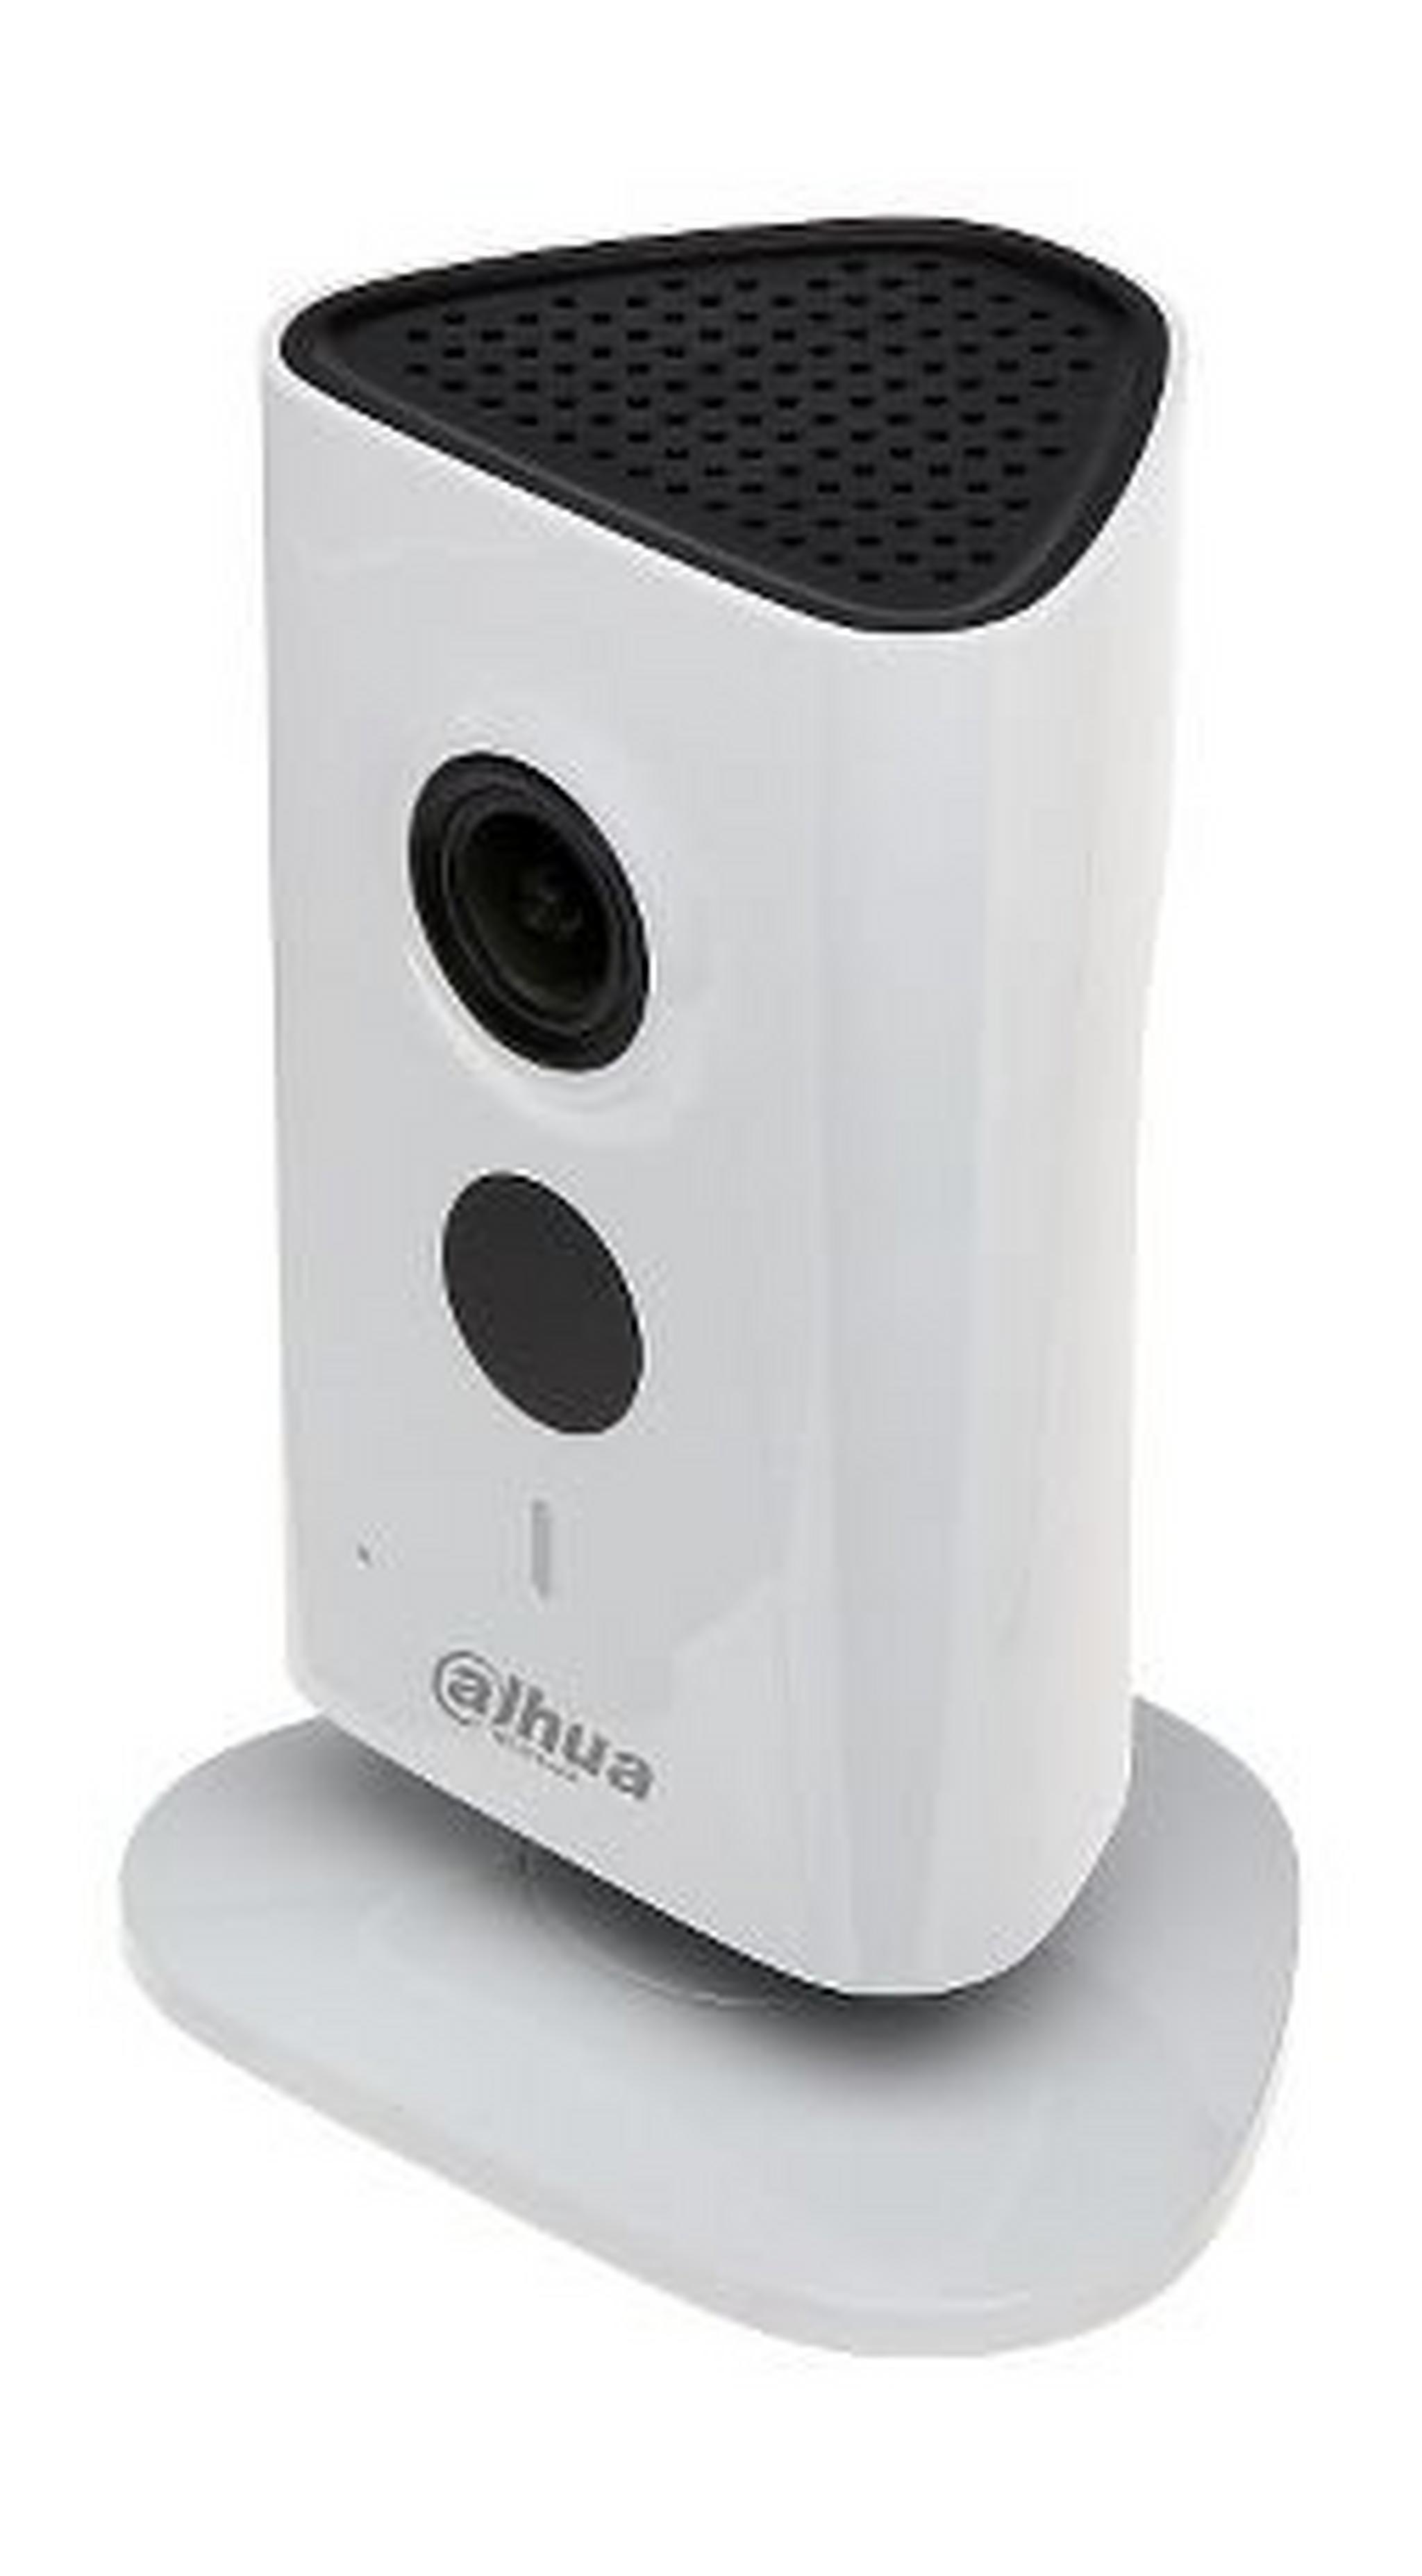 Dahua Wifi Indoor Cloud Security Camera (C46P) - White